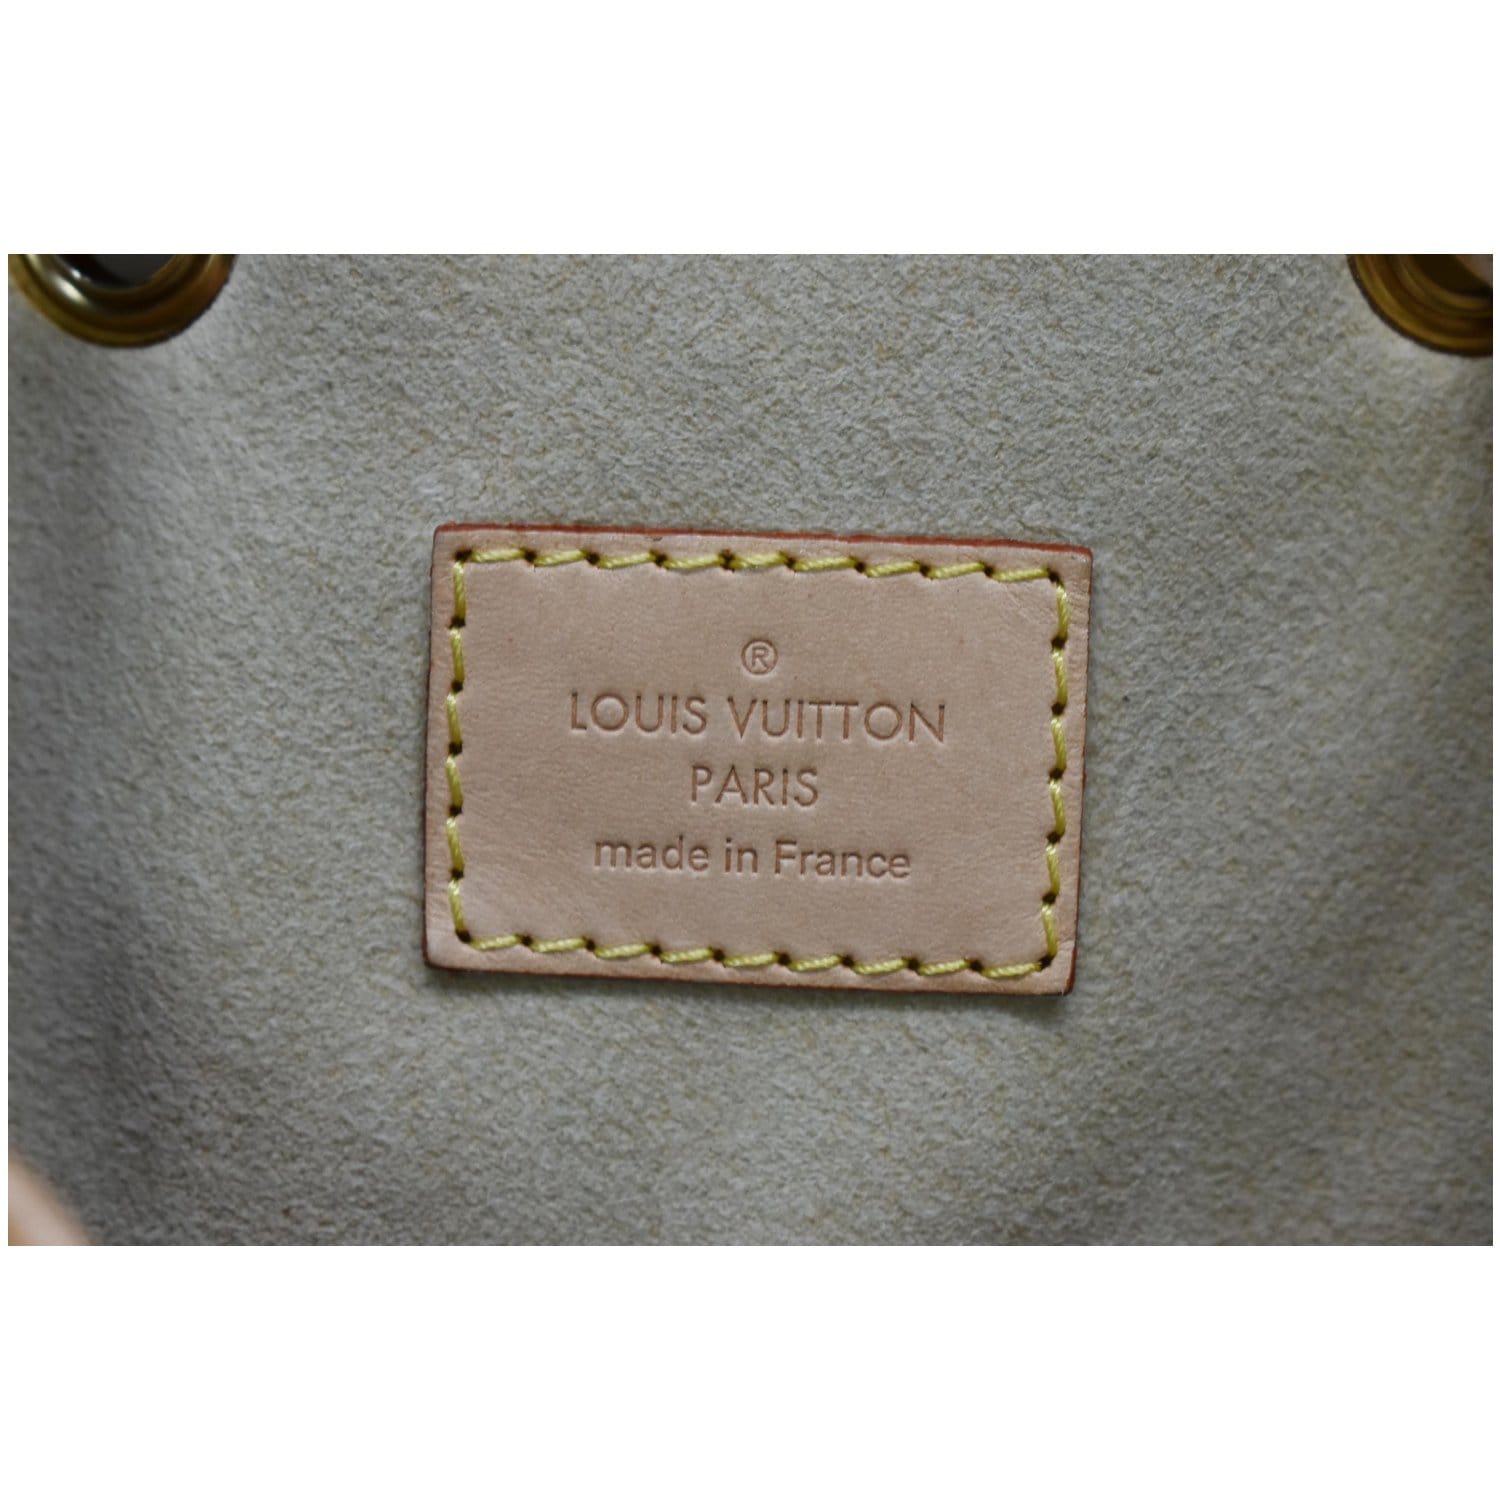 580. Louis Vuitton Noé Eden Neo GM Shoulder Bag in Peche, Limited Edition  Spring 2010 - September 2022 - ASPIRE AUCTIONS